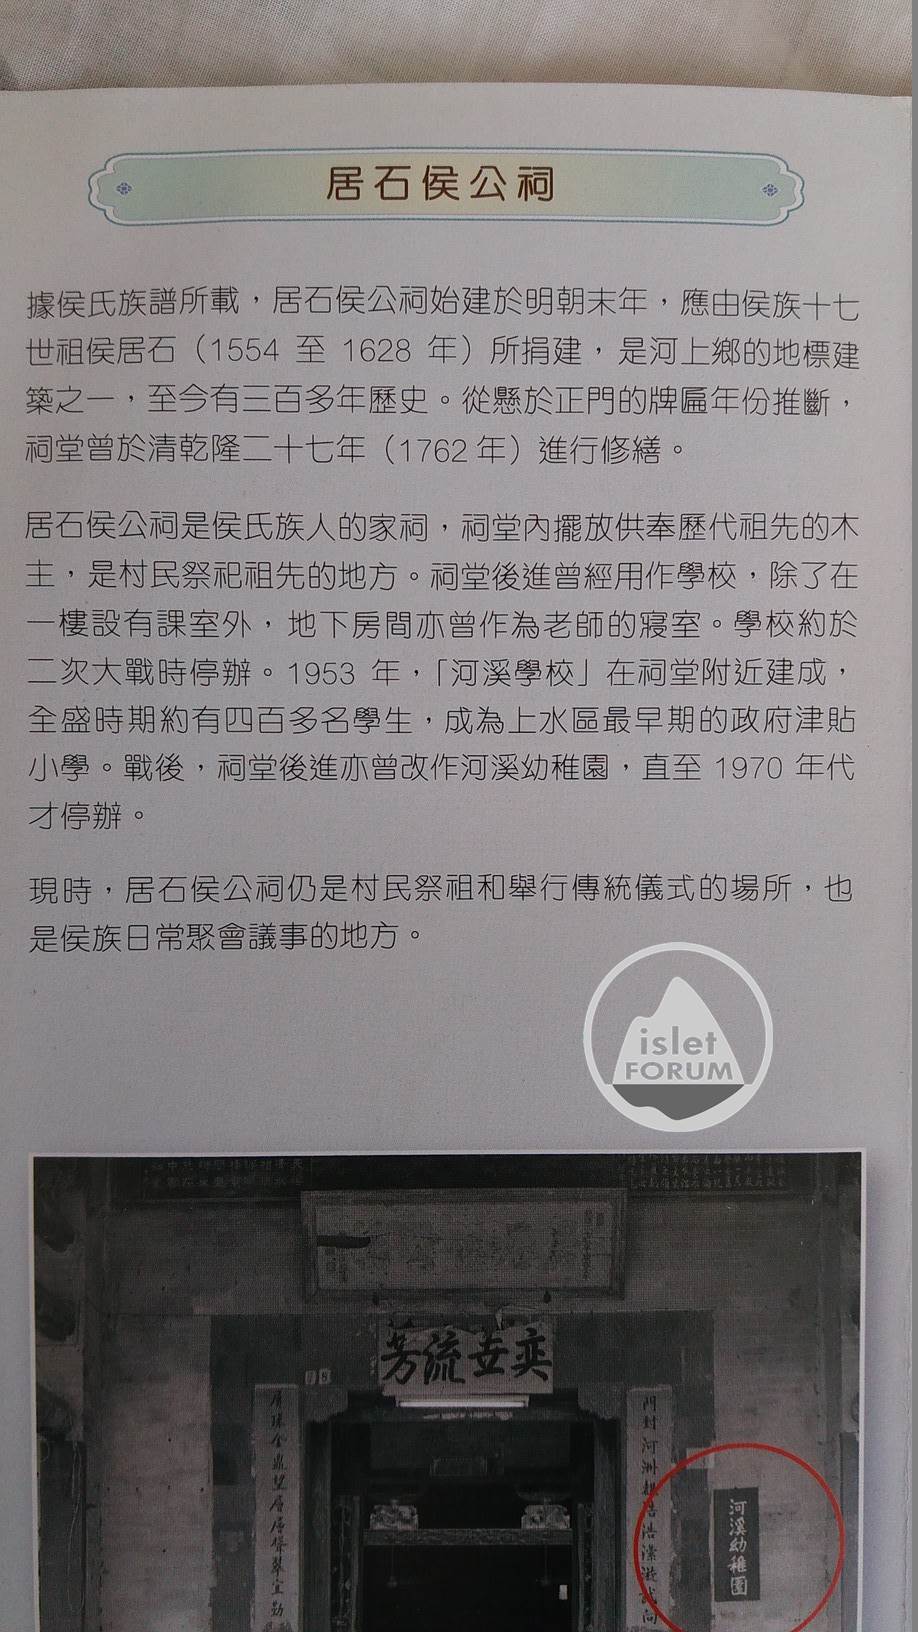 居石侯公祠hau kui shek ancestral hall (3).jpg